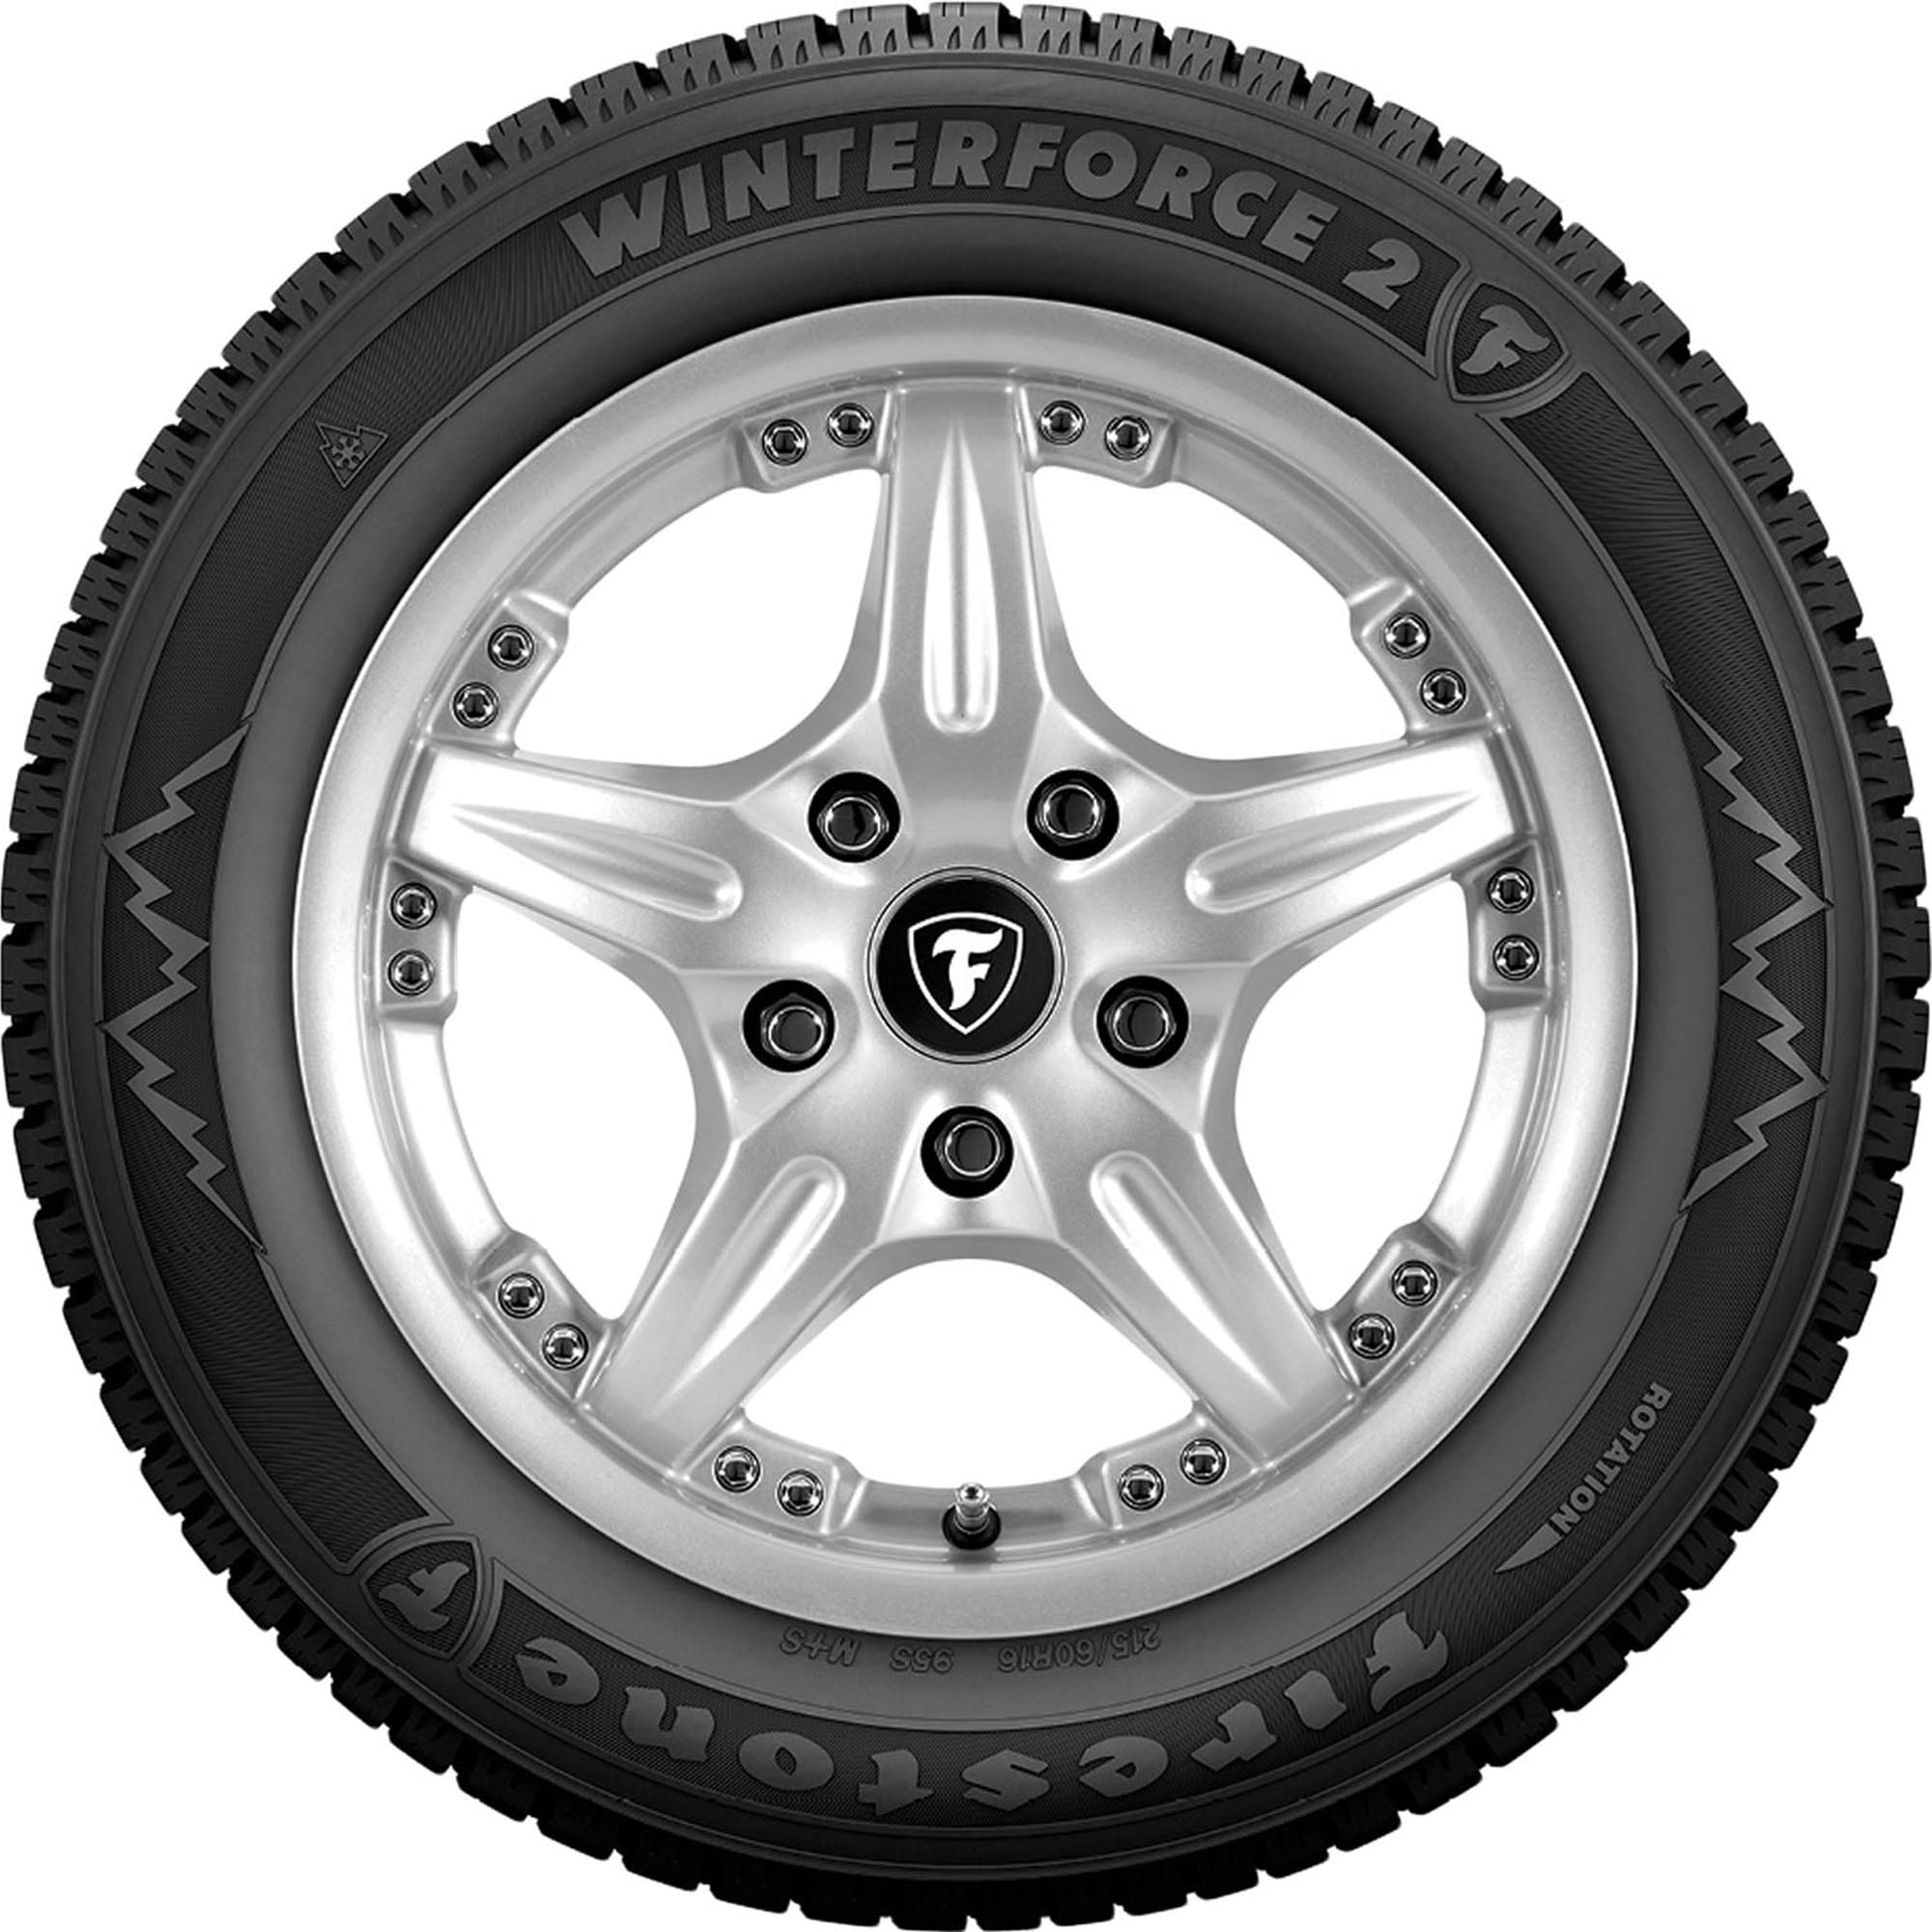 Firestone Winterforce 2 Winter 215/70R15 98S Passenger Tire